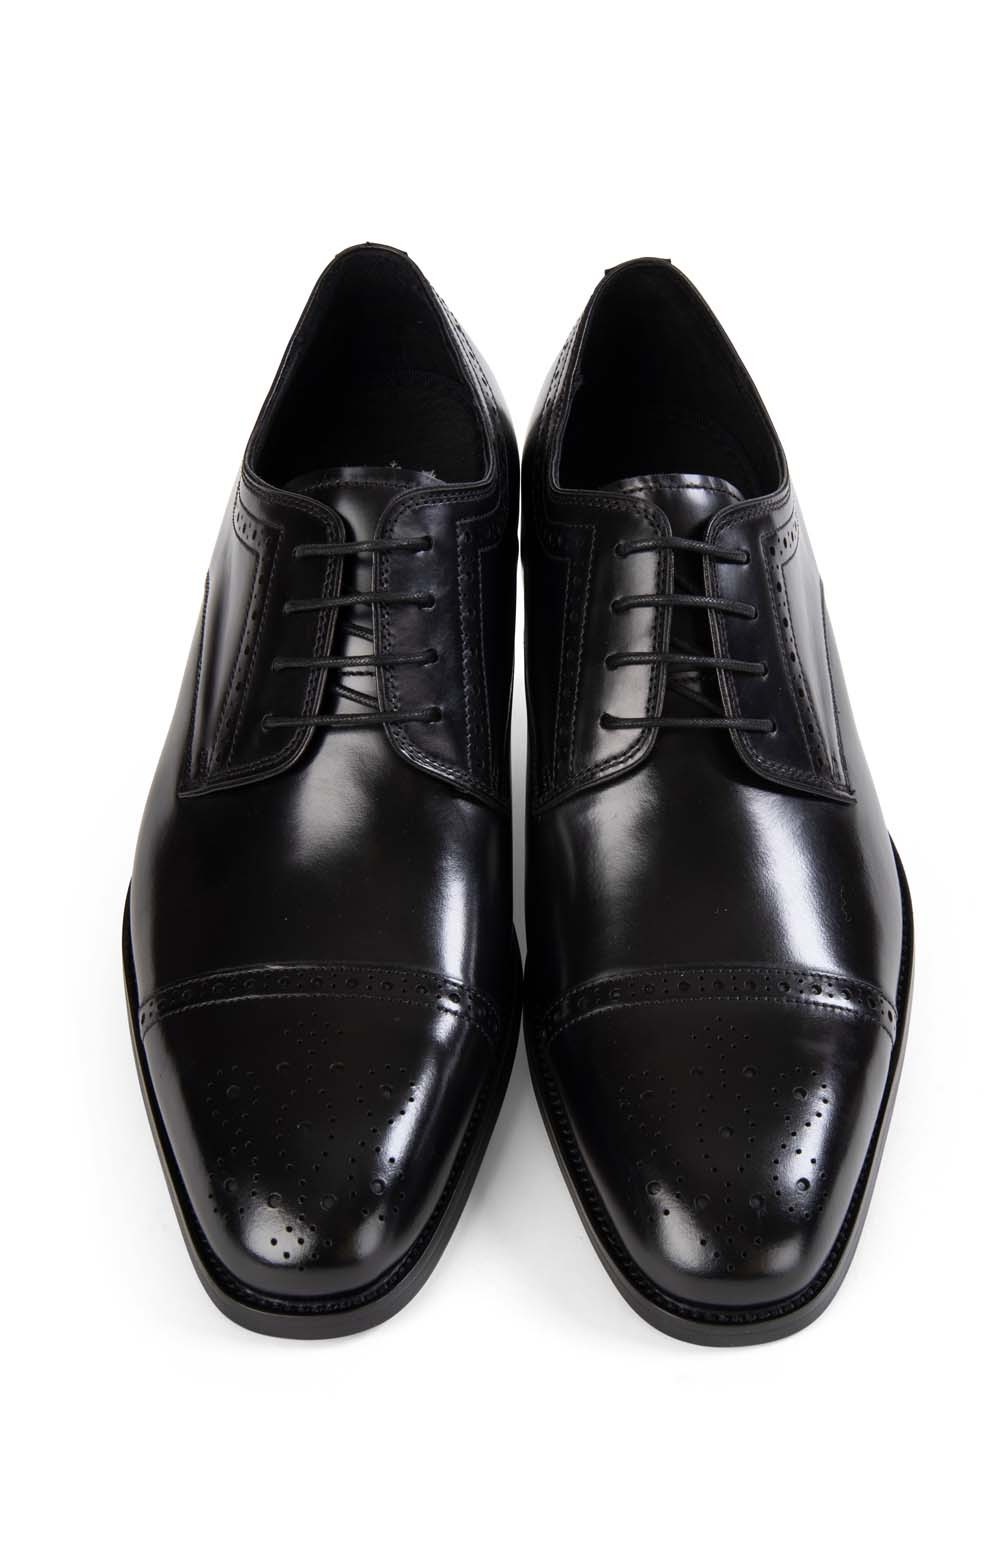 mens black leather brogue shoes